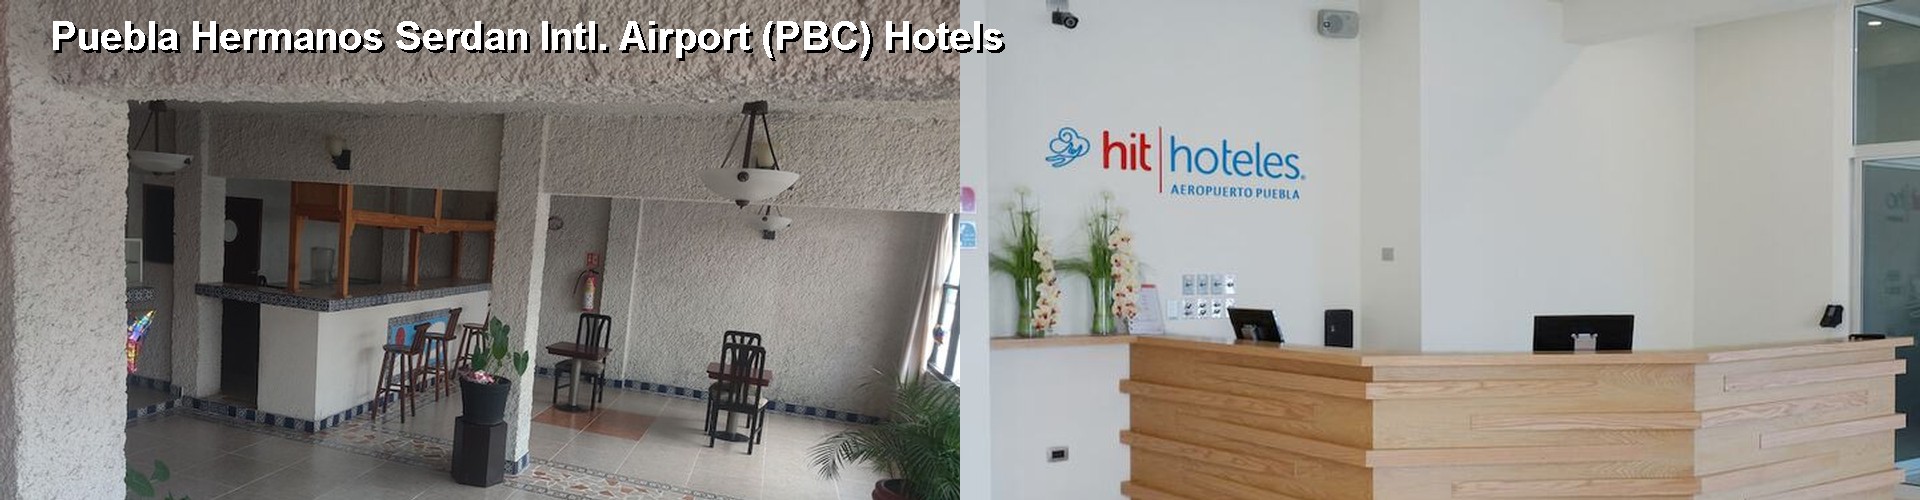 5 Best Hotels near Puebla Hermanos Serdan Intl. Airport (PBC)